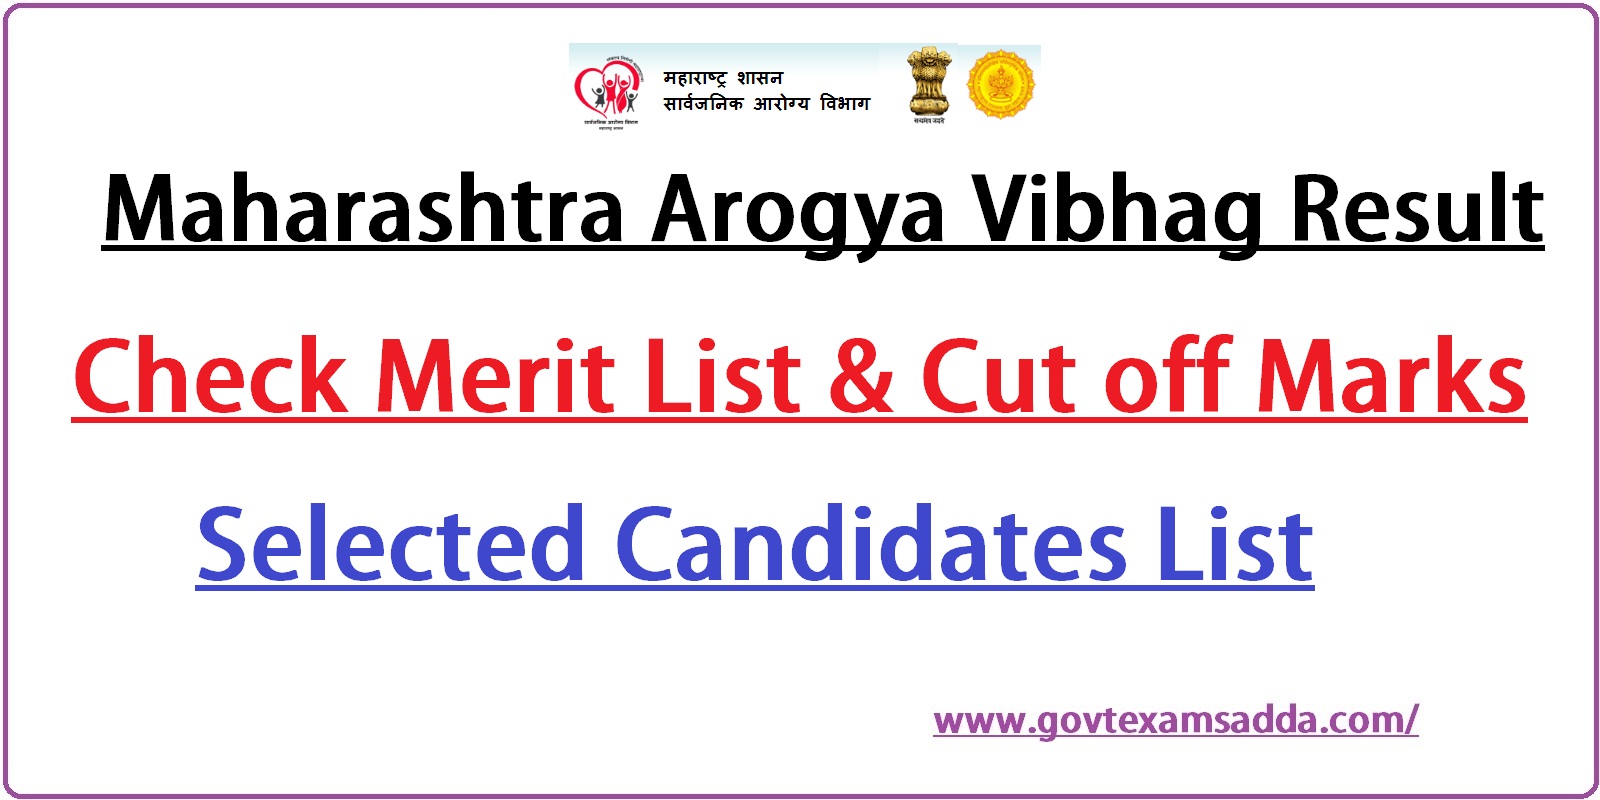 Maharashtra Arogya Vibhag Result 2021